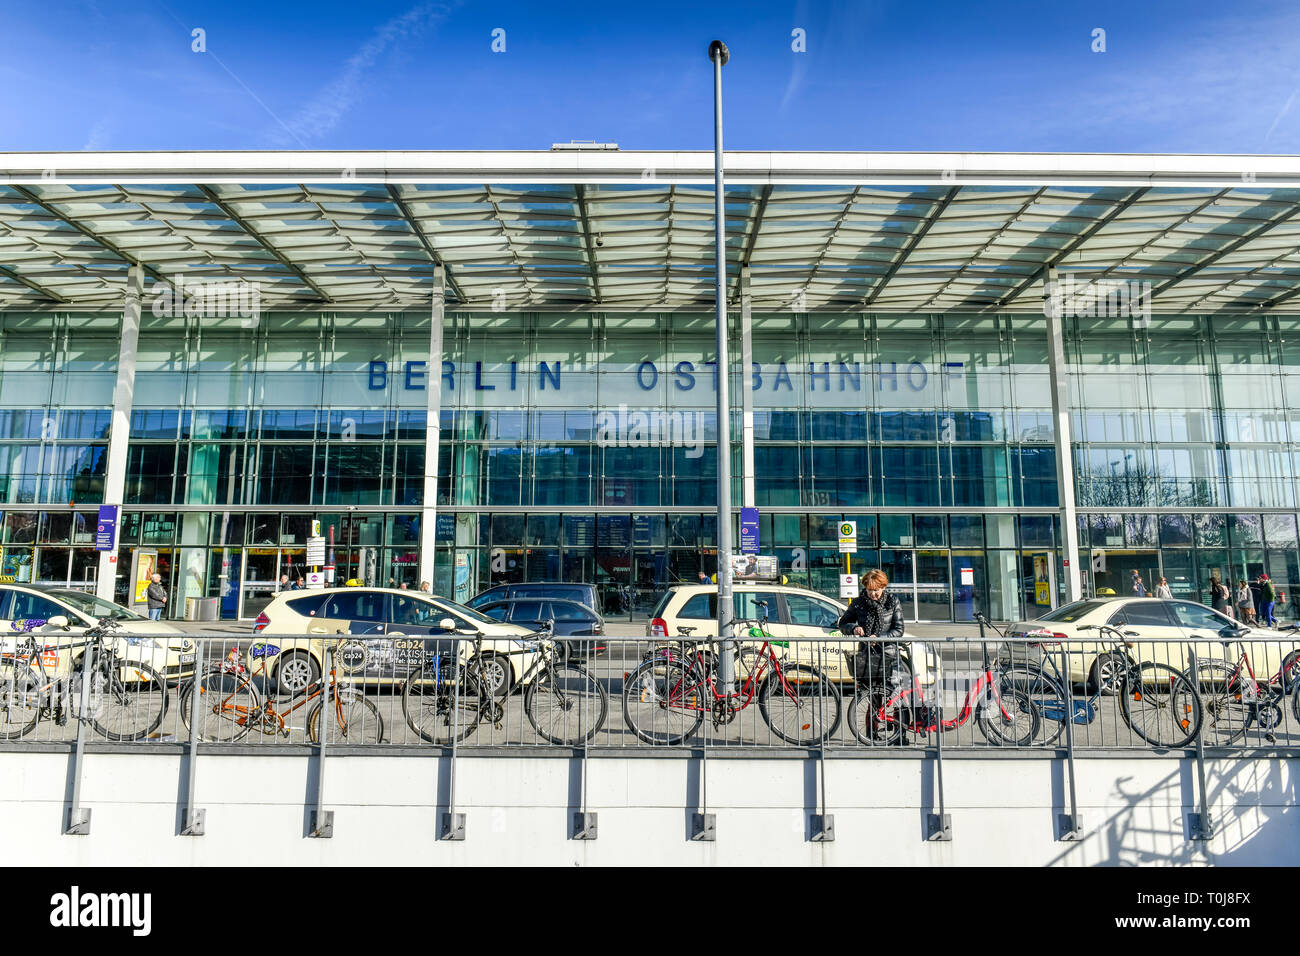 La stazione ferroviaria est, Friedrich di grove, Berlino, Germania, Ostbahnhof, Friedrichshain, Deutschland Foto Stock